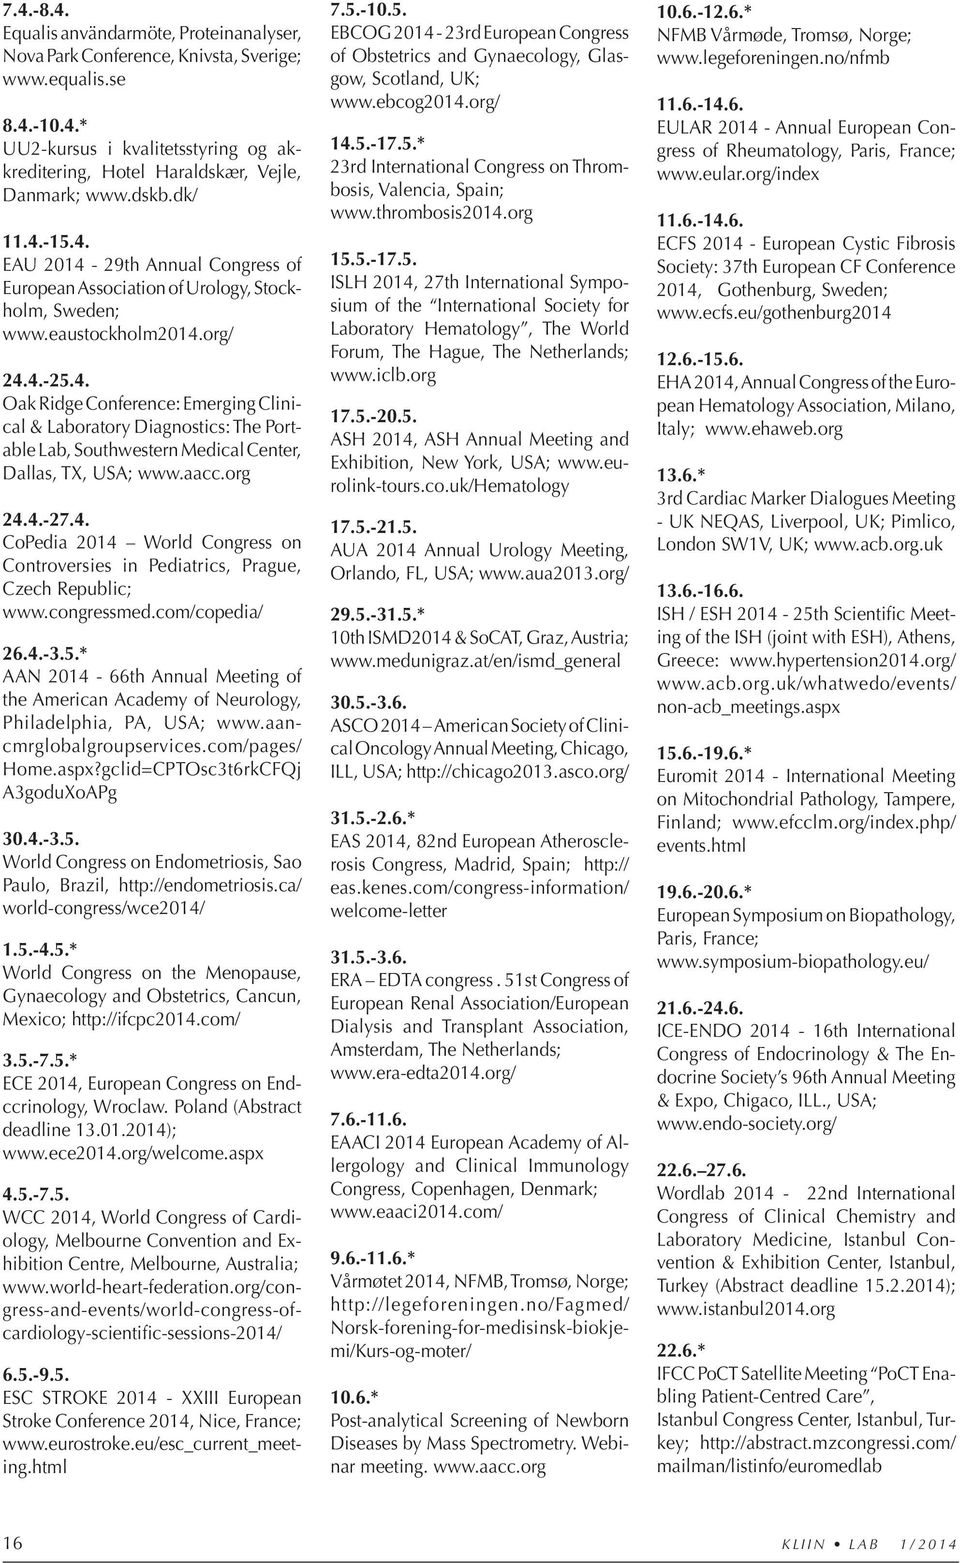 aacc.org 24.4.-27.4. CoPedia 2014 World Congress on Cont roversies in Pediatrics, Prague, Czech Republic; www.congressmed.com/copedia/ 26.4.-3.5.